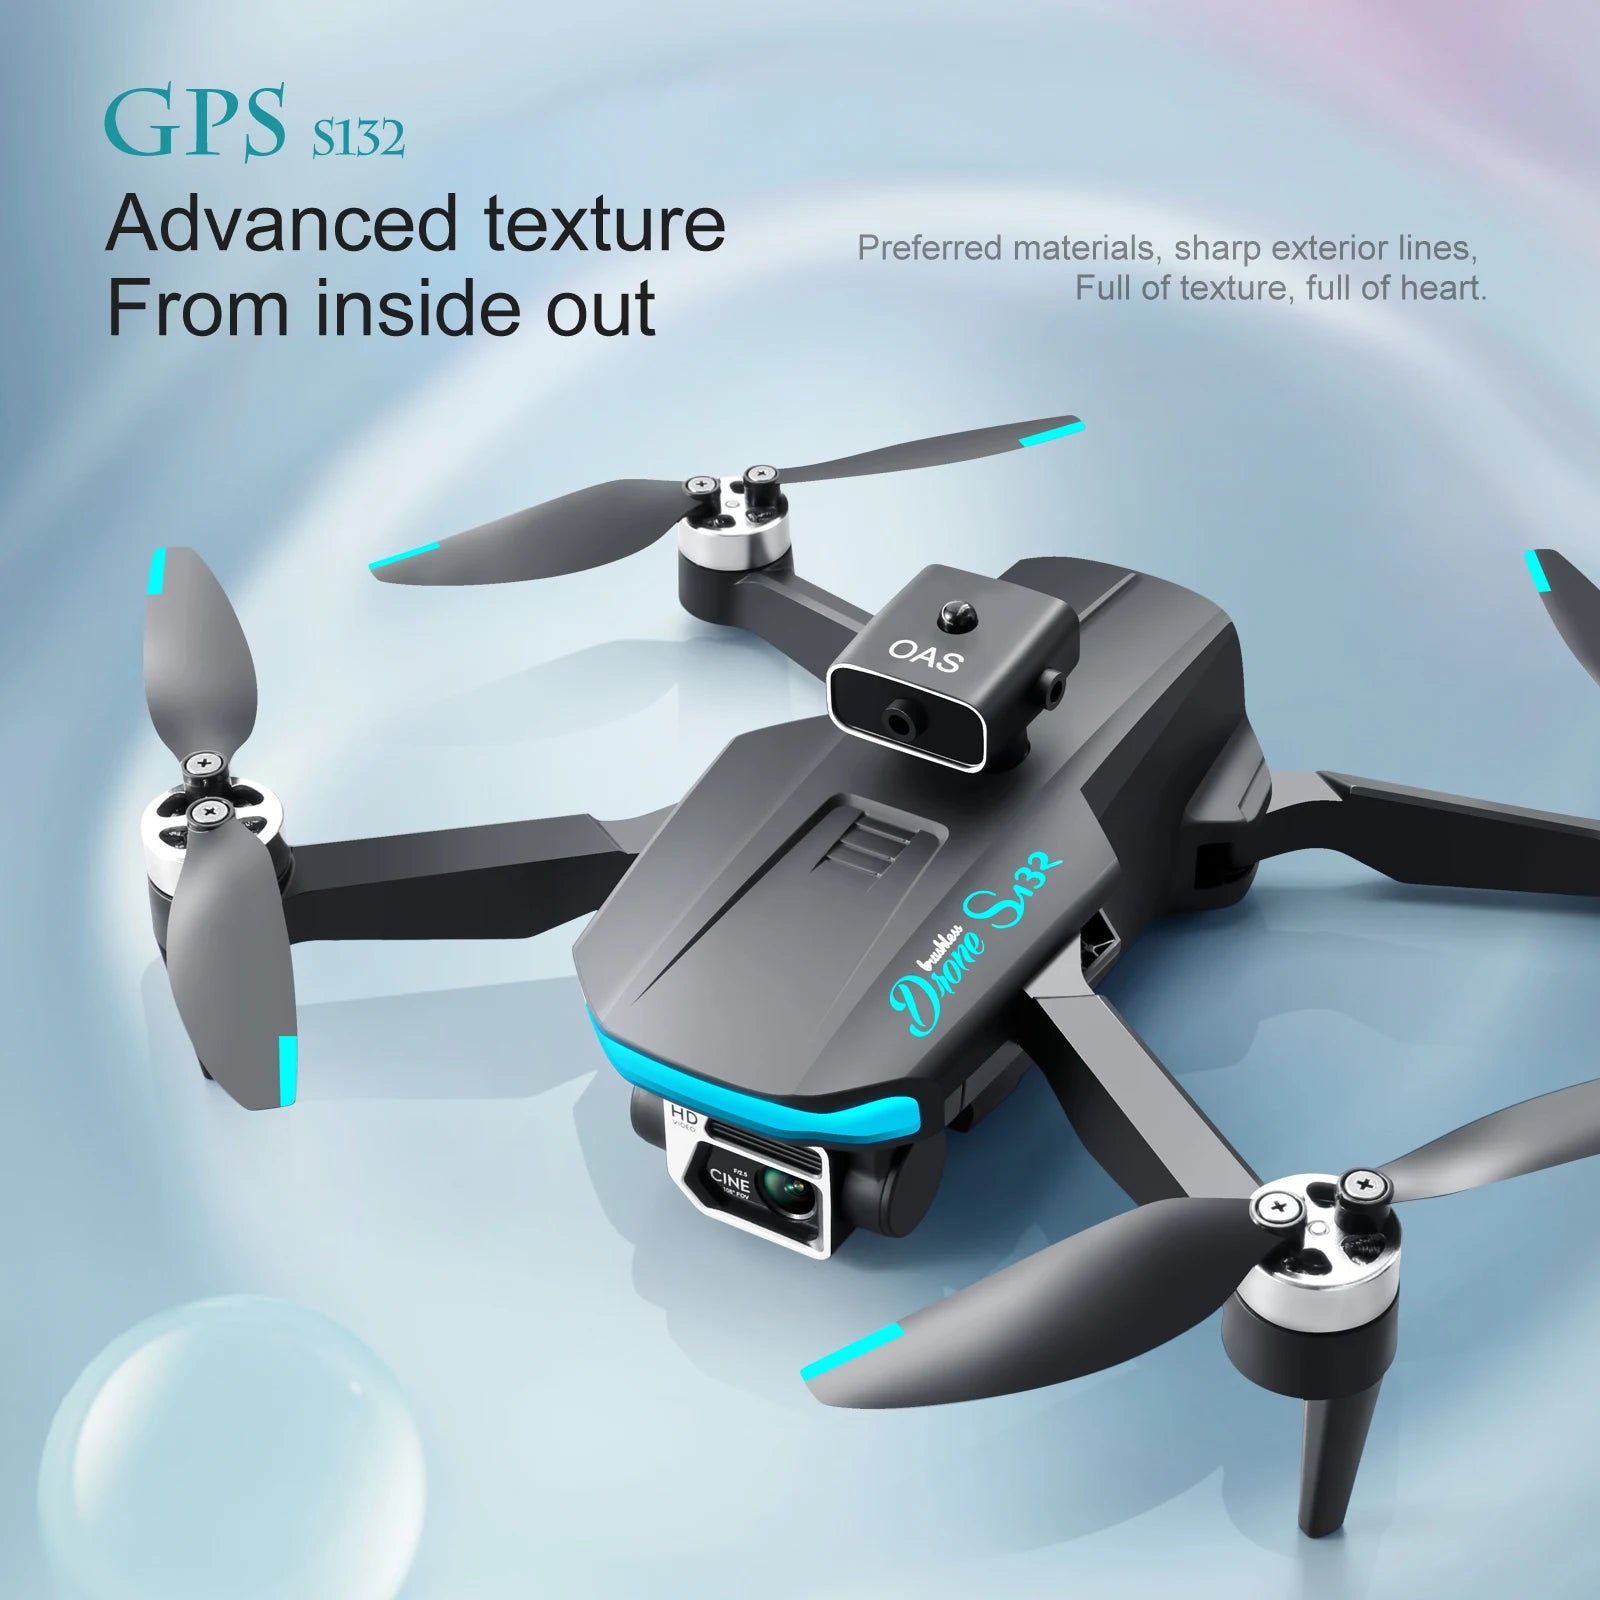 S132 Drone, gps s132 advanced texture preferred materials, sharp exterior